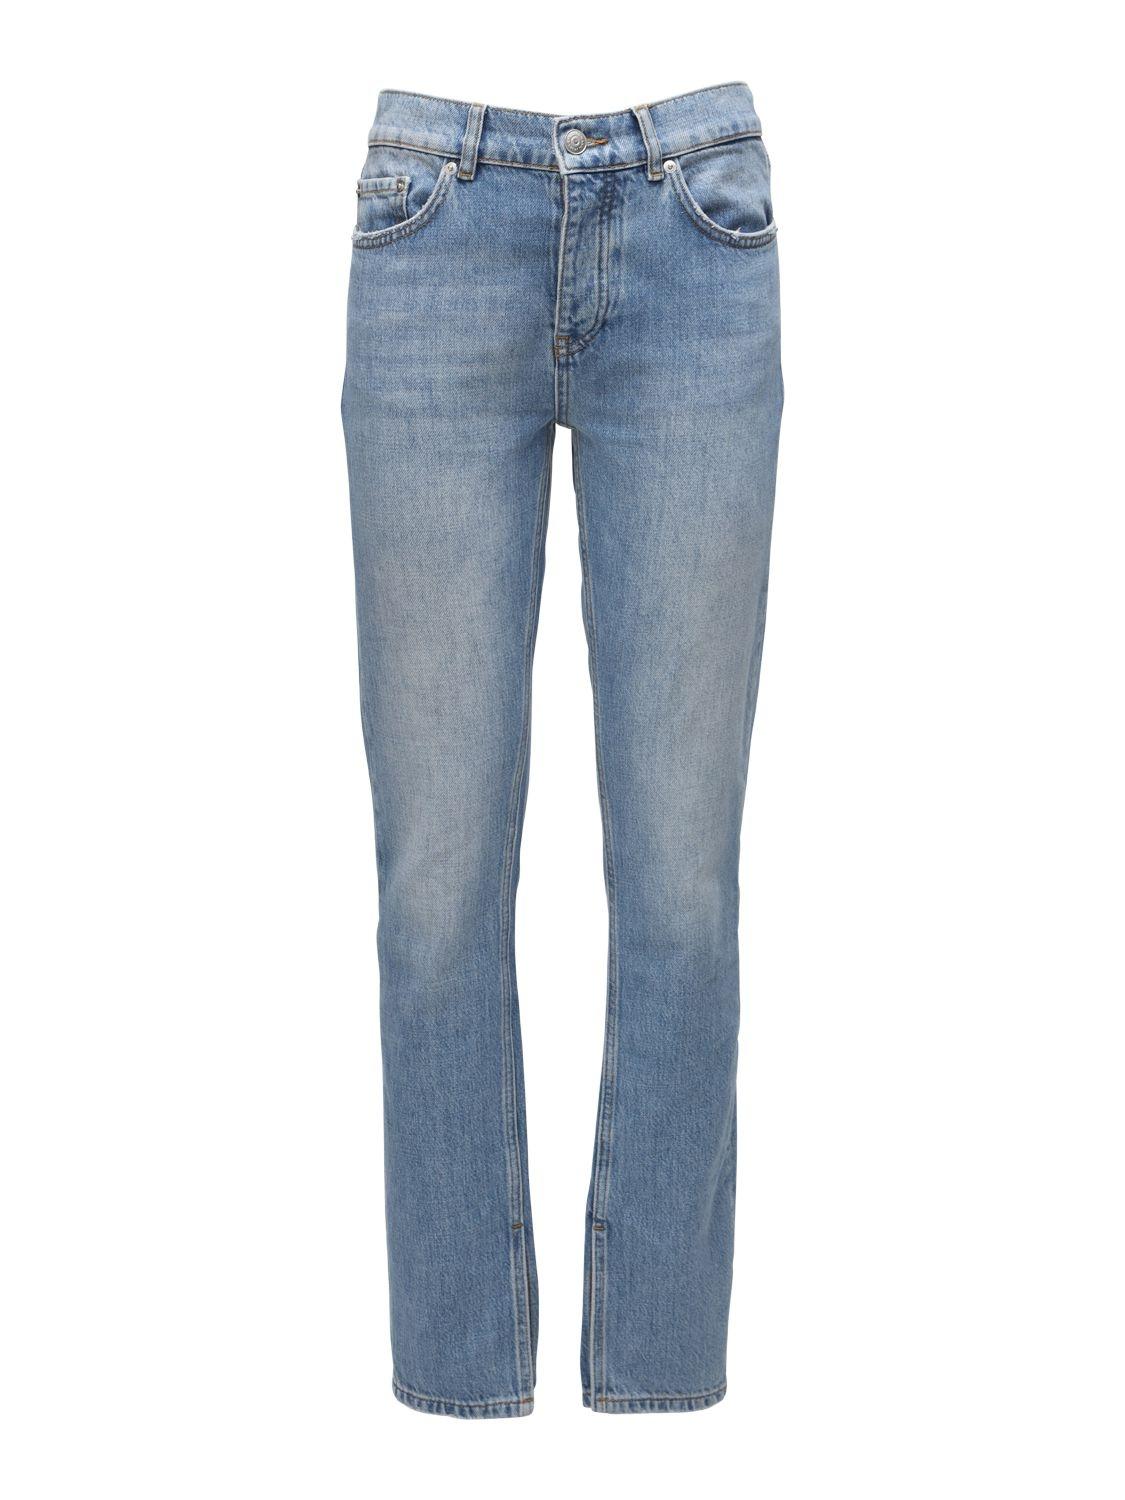 Ganni Straight Leg Cotton Denim Jeans in Light Blue (Blue) - Lyst